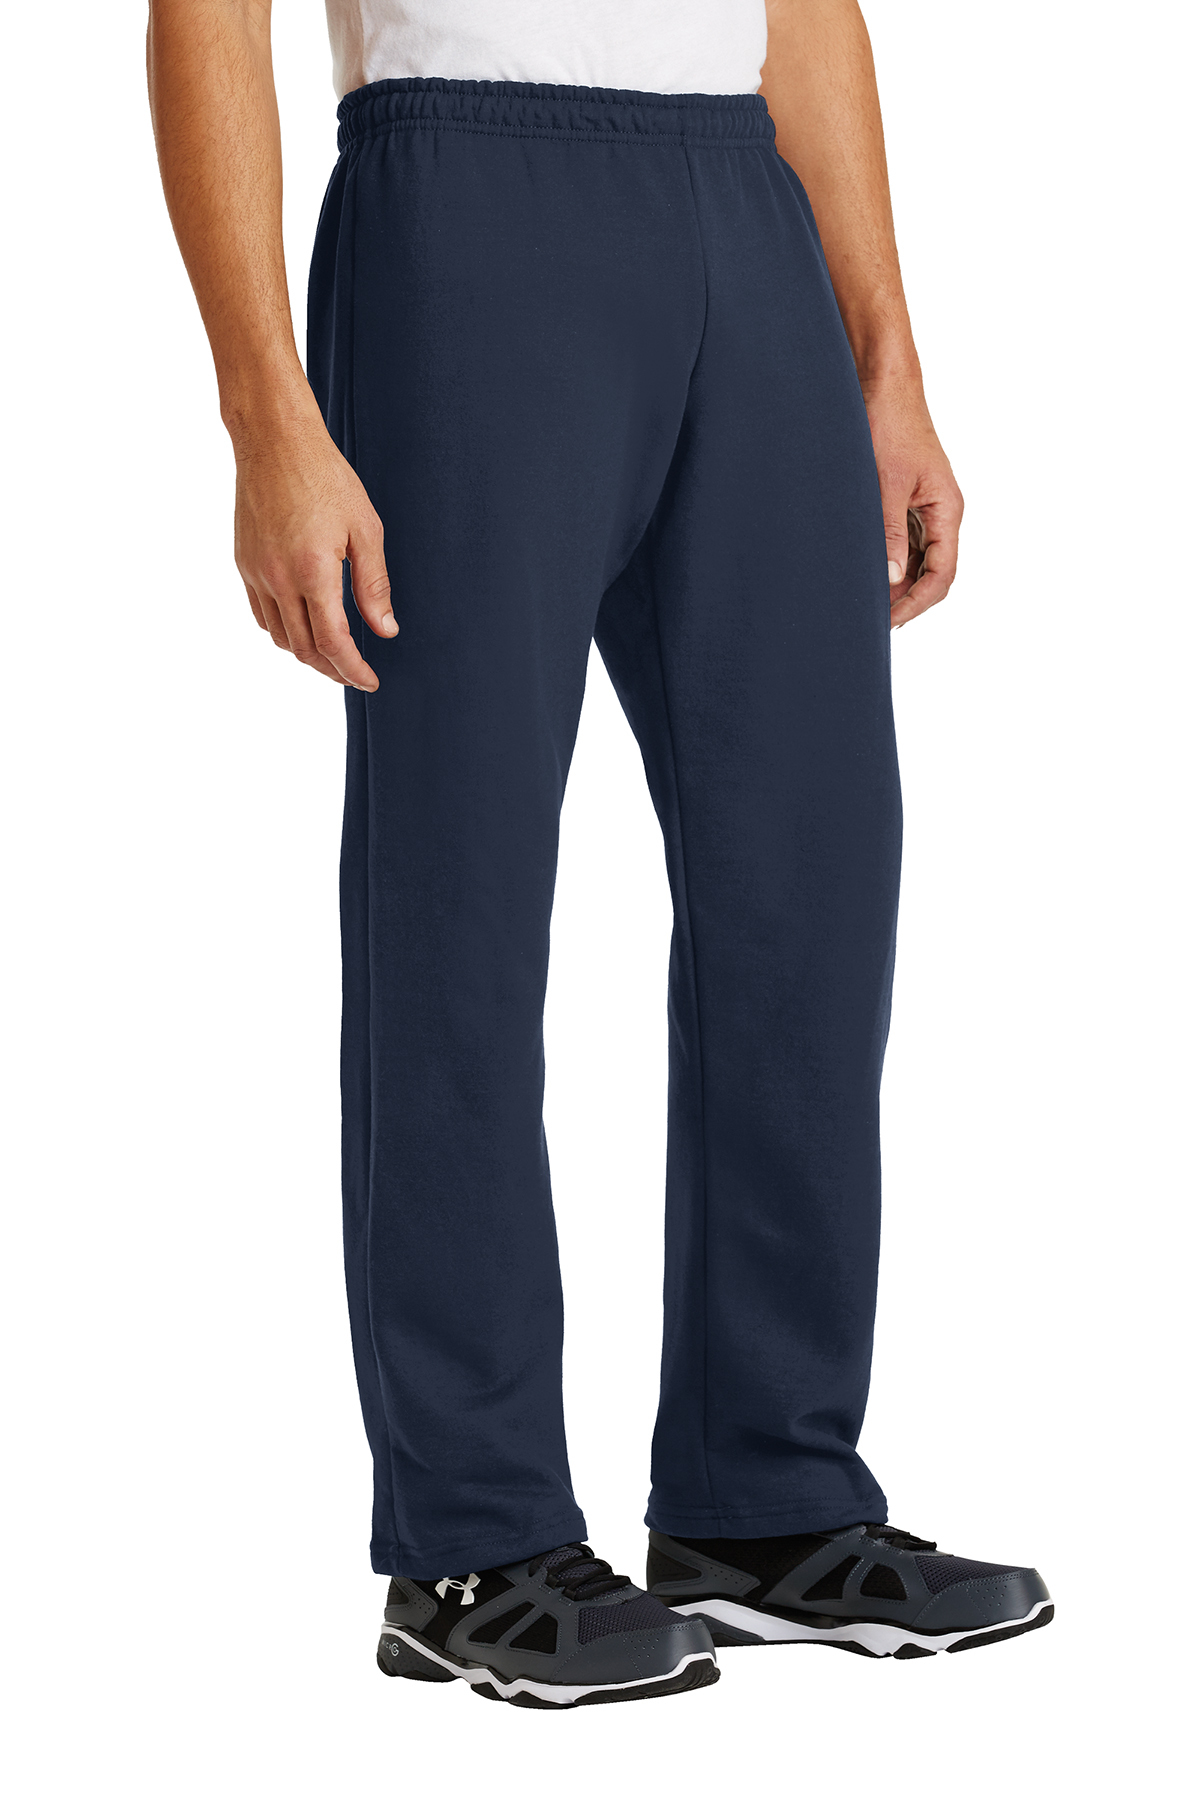 Mens Navy Sweatpants Lounge Pants Size M L XL XXL Open Hem Long Bottoms  Joggers